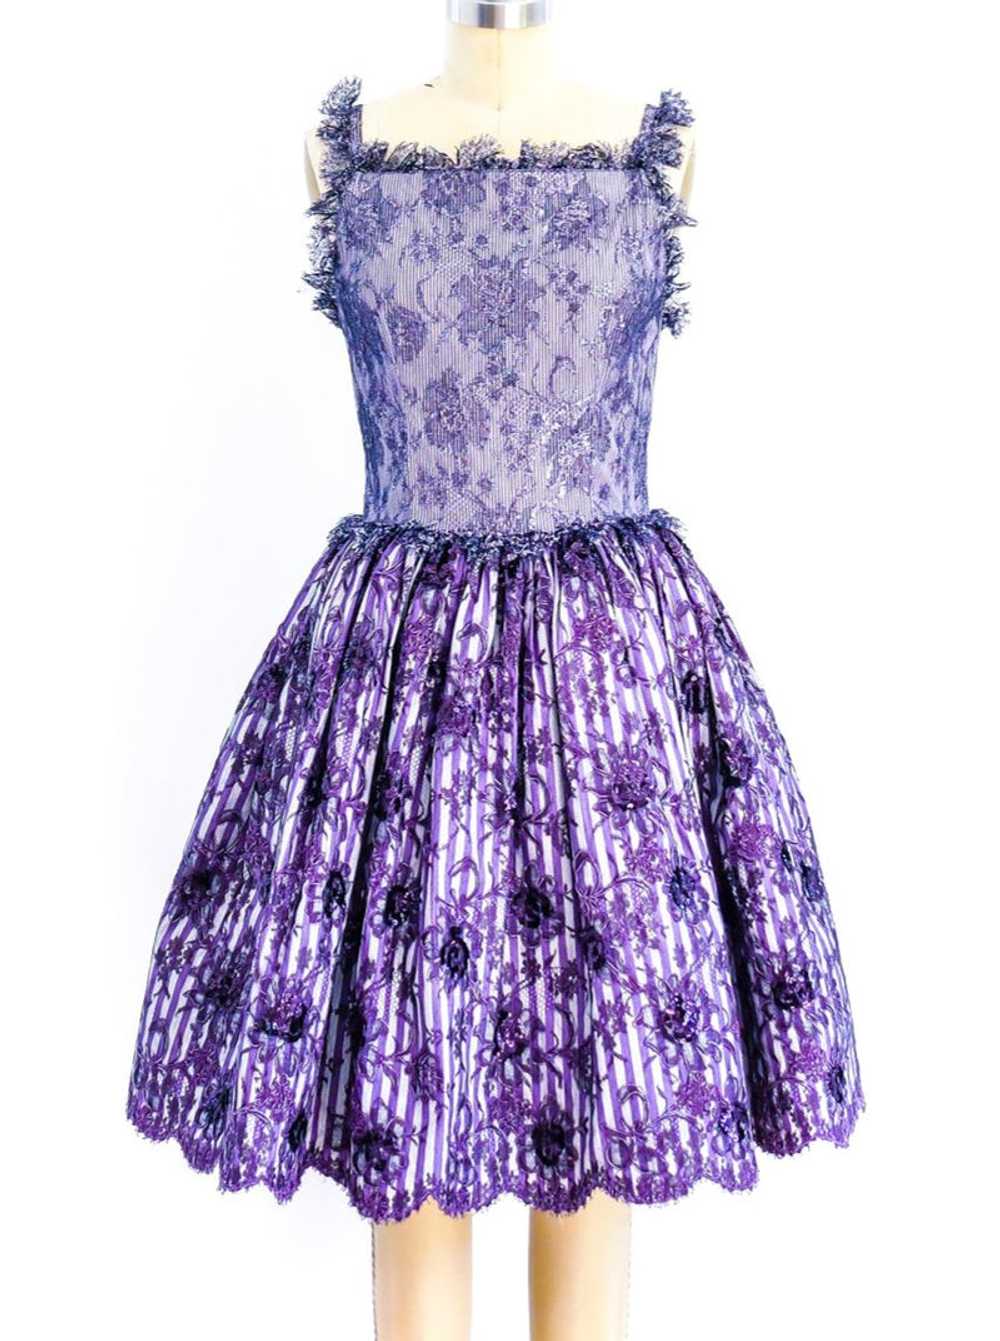 Geoffrey Beene Purple Lace Cocktail Dress - image 1